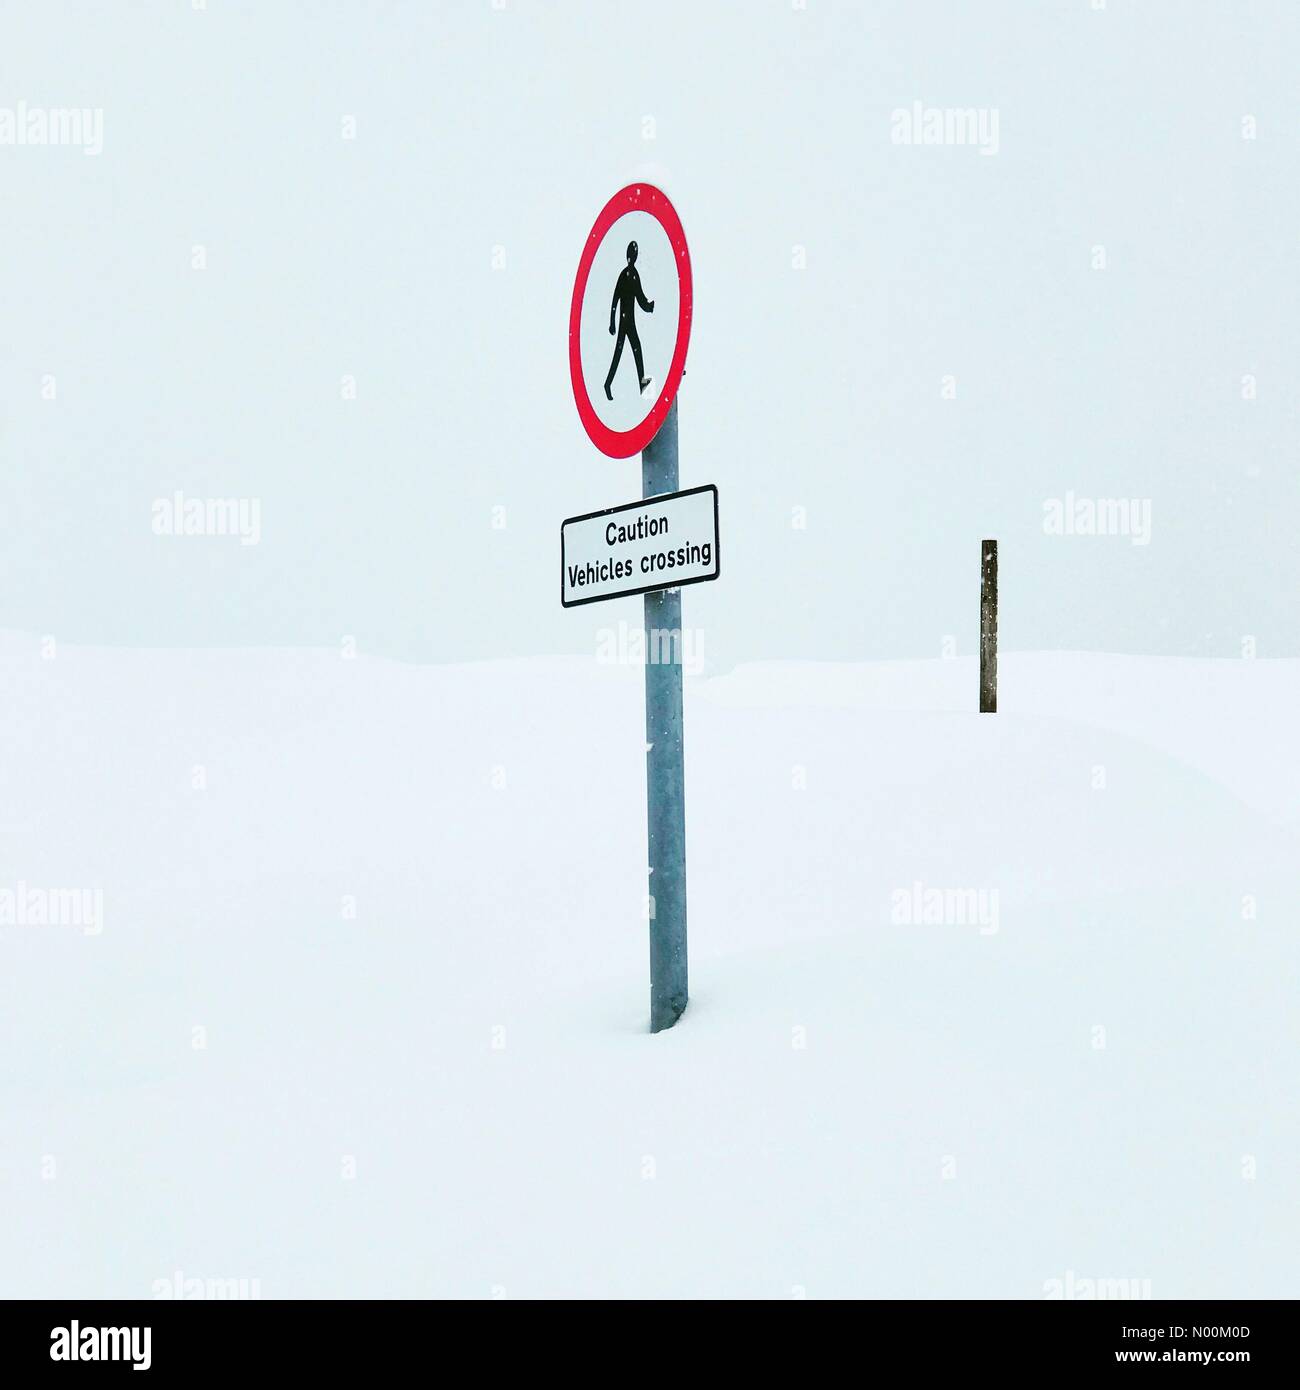 Brampton, UK. 01st Mar, 2018. Caution vehicles crossing sign in the snow Credit: David Crausby/StockimoNews/Alamy Live News Stock Photo